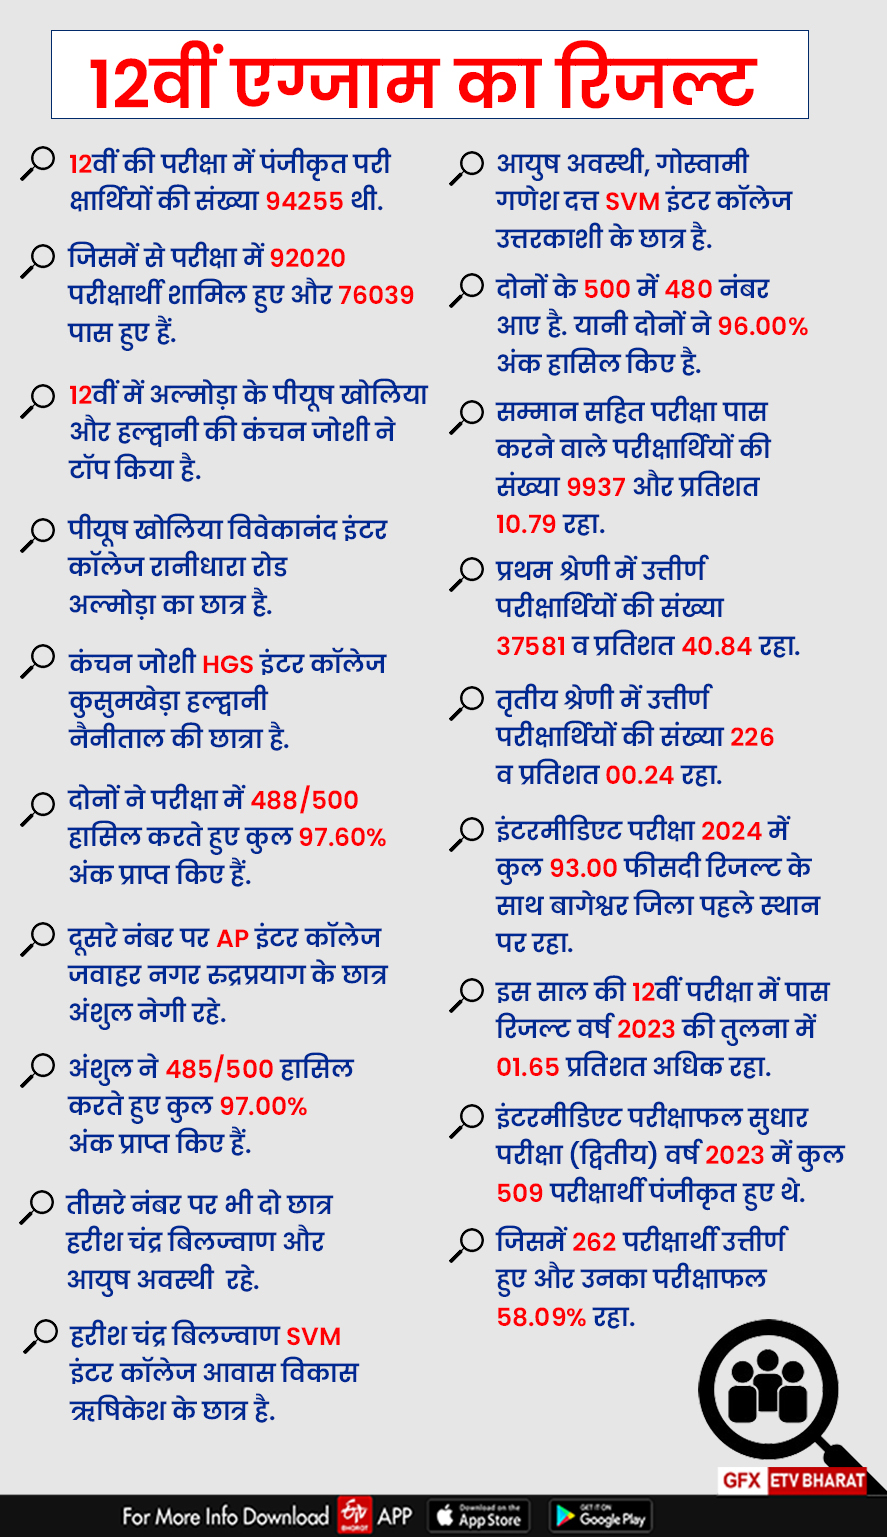 Uttarakhand Board results